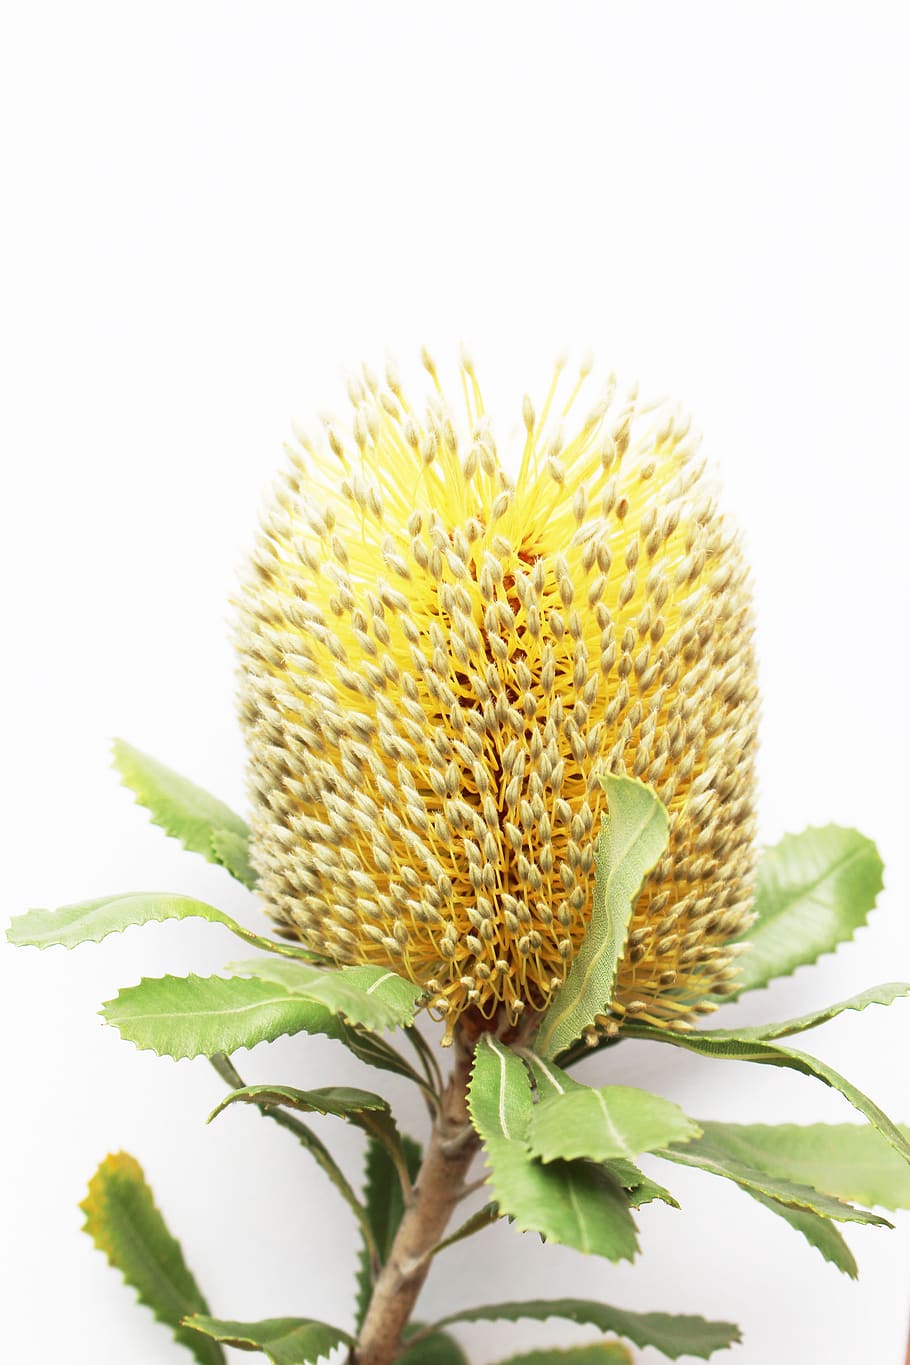 banksia, amarillo, australia, australiano, naturaleza, silvestre, flores silvestres, flor, semilla, jardín